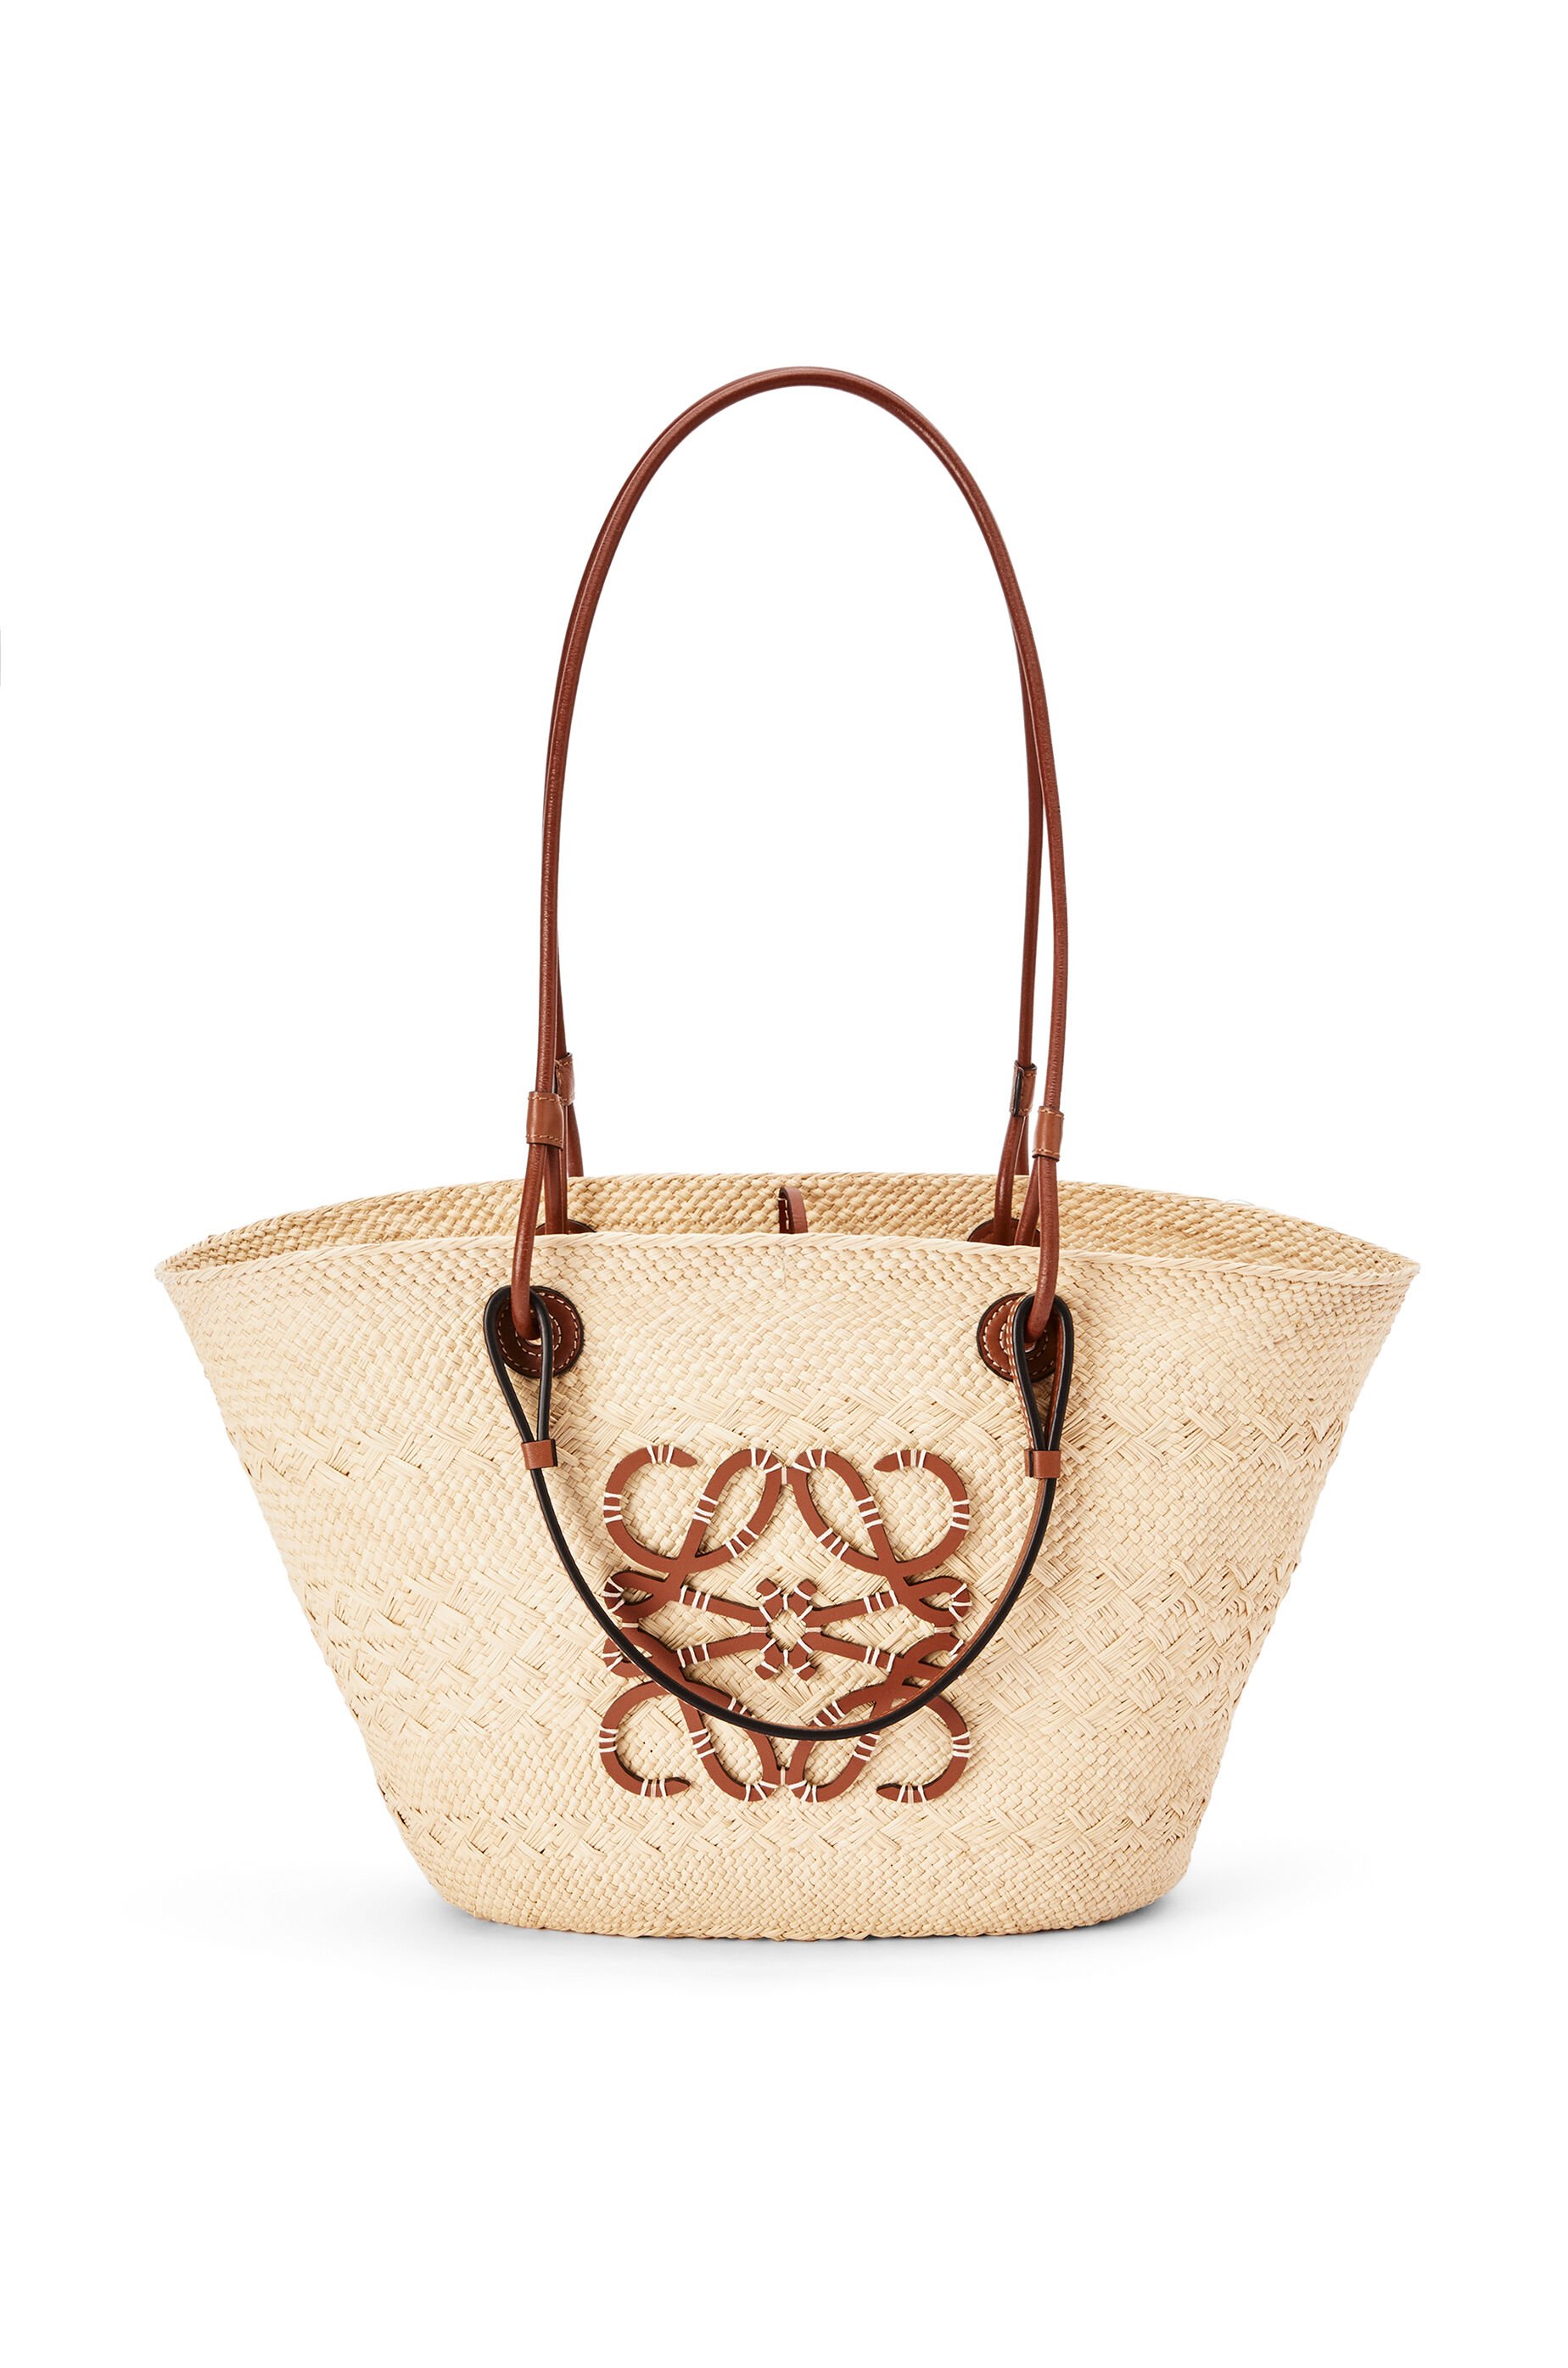 Anagram Basket bag in iraca palm and calfskin Natural/Tan - LOEWE